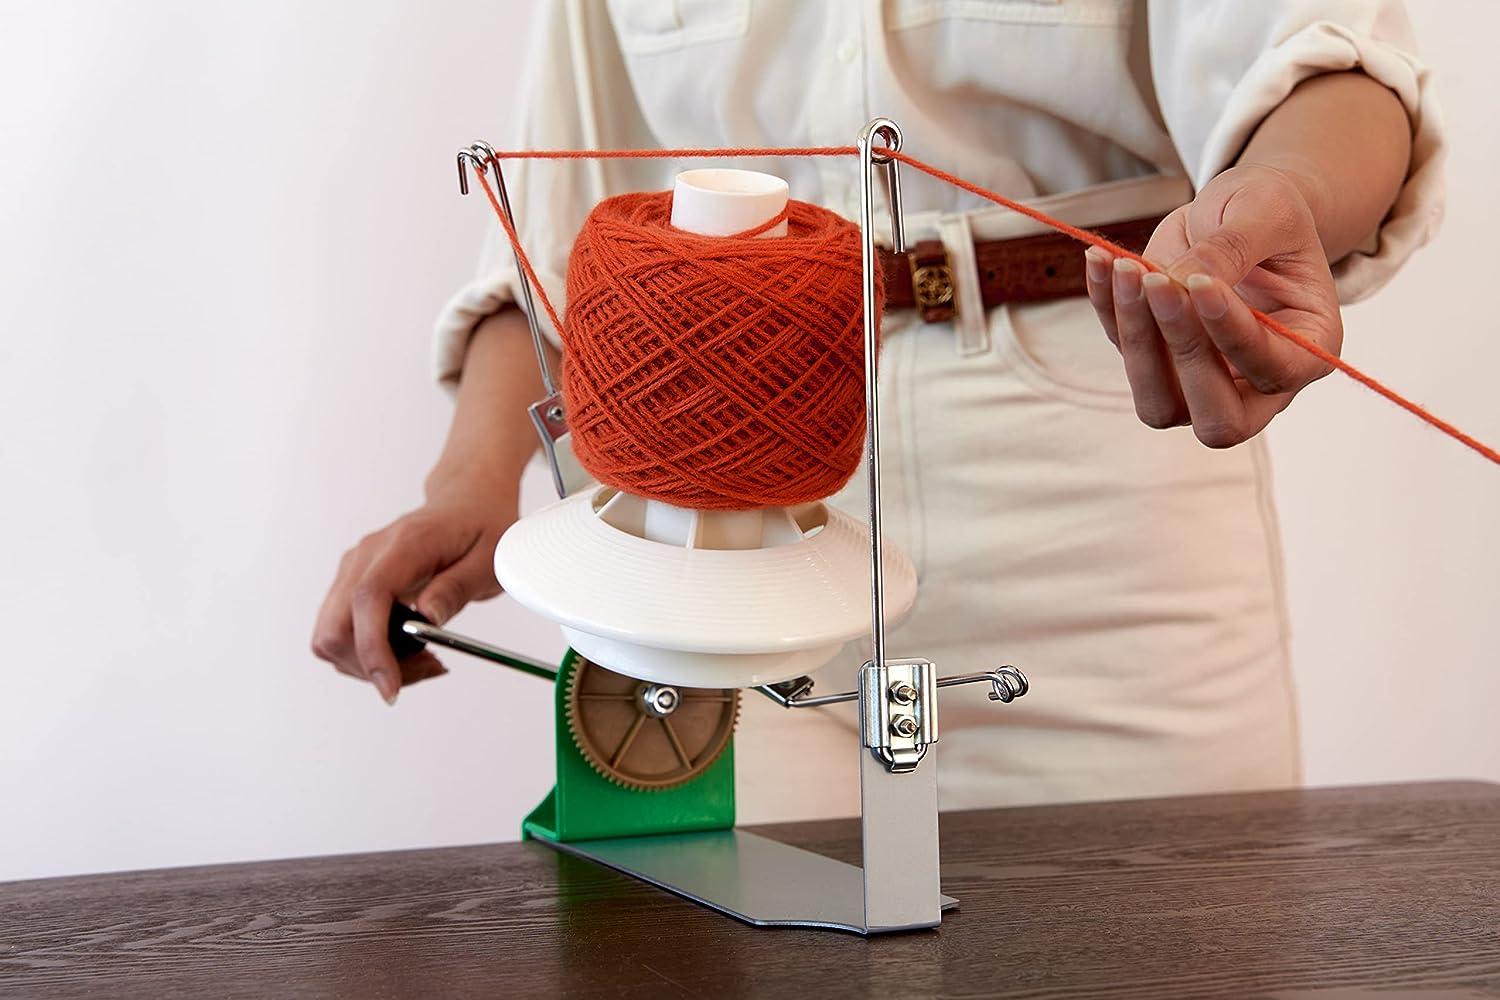  Olikraft 𝐋𝐚𝐫𝐠𝐞 𝐂𝐚𝐩𝐚𝐜𝐢𝐭𝐲 𝐘𝐚𝐫𝐧 𝐖𝐢𝐧𝐝𝐞𝐫 -  Hand Operated Metal Yarn Ball Winder. Support 10 to 16 oz of Yarn Fiber Wool  String (Stainless Steel)